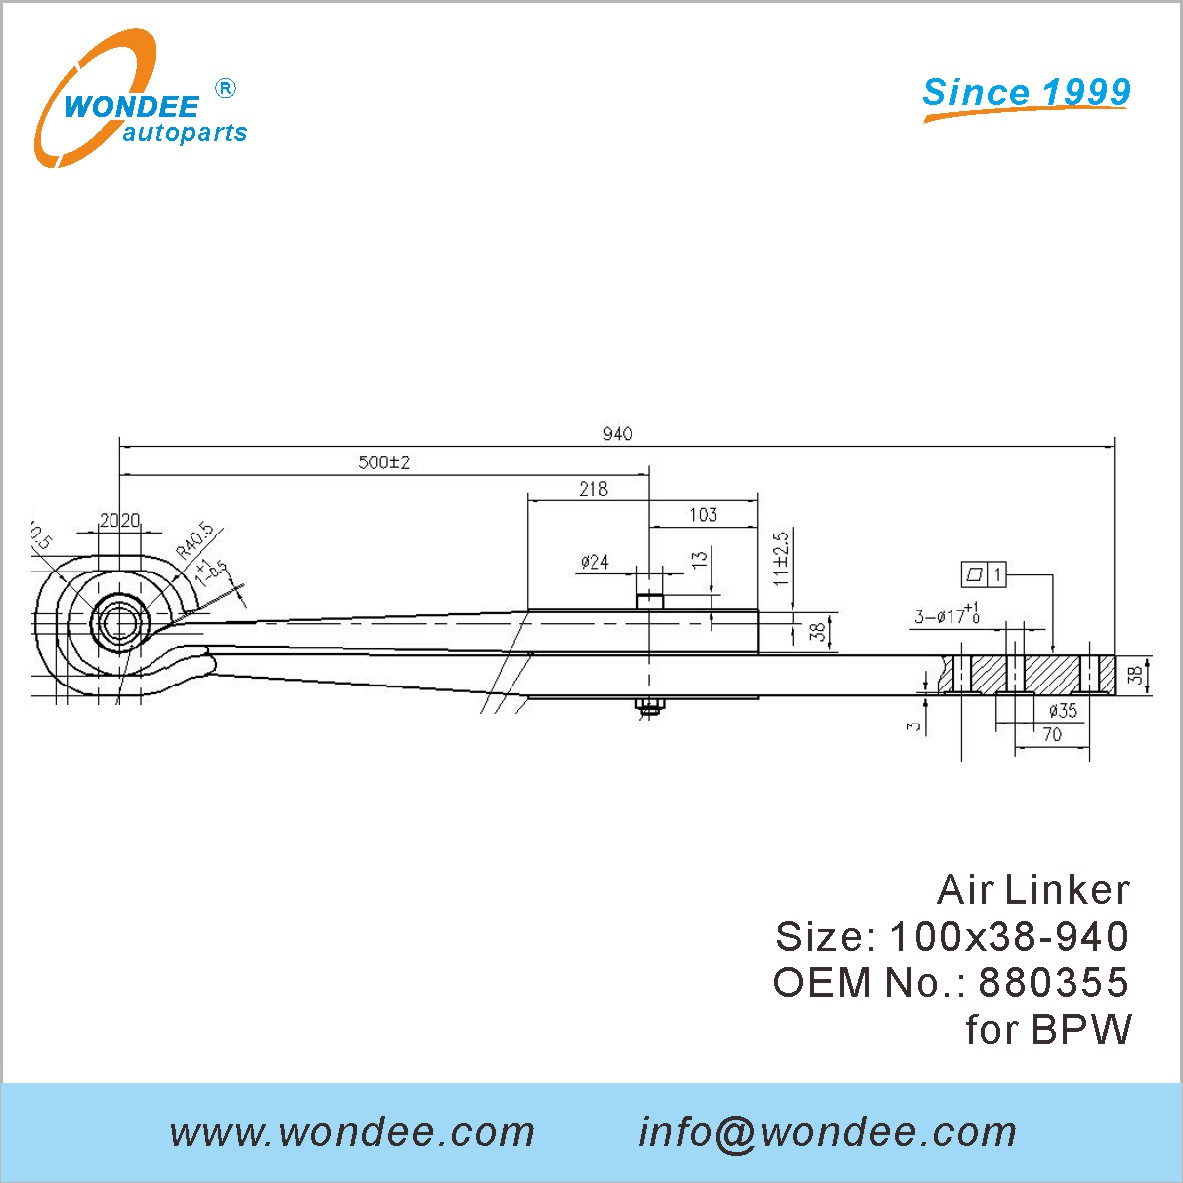 WONDEE Autoparts Air Linker OEM 880355 for BPW